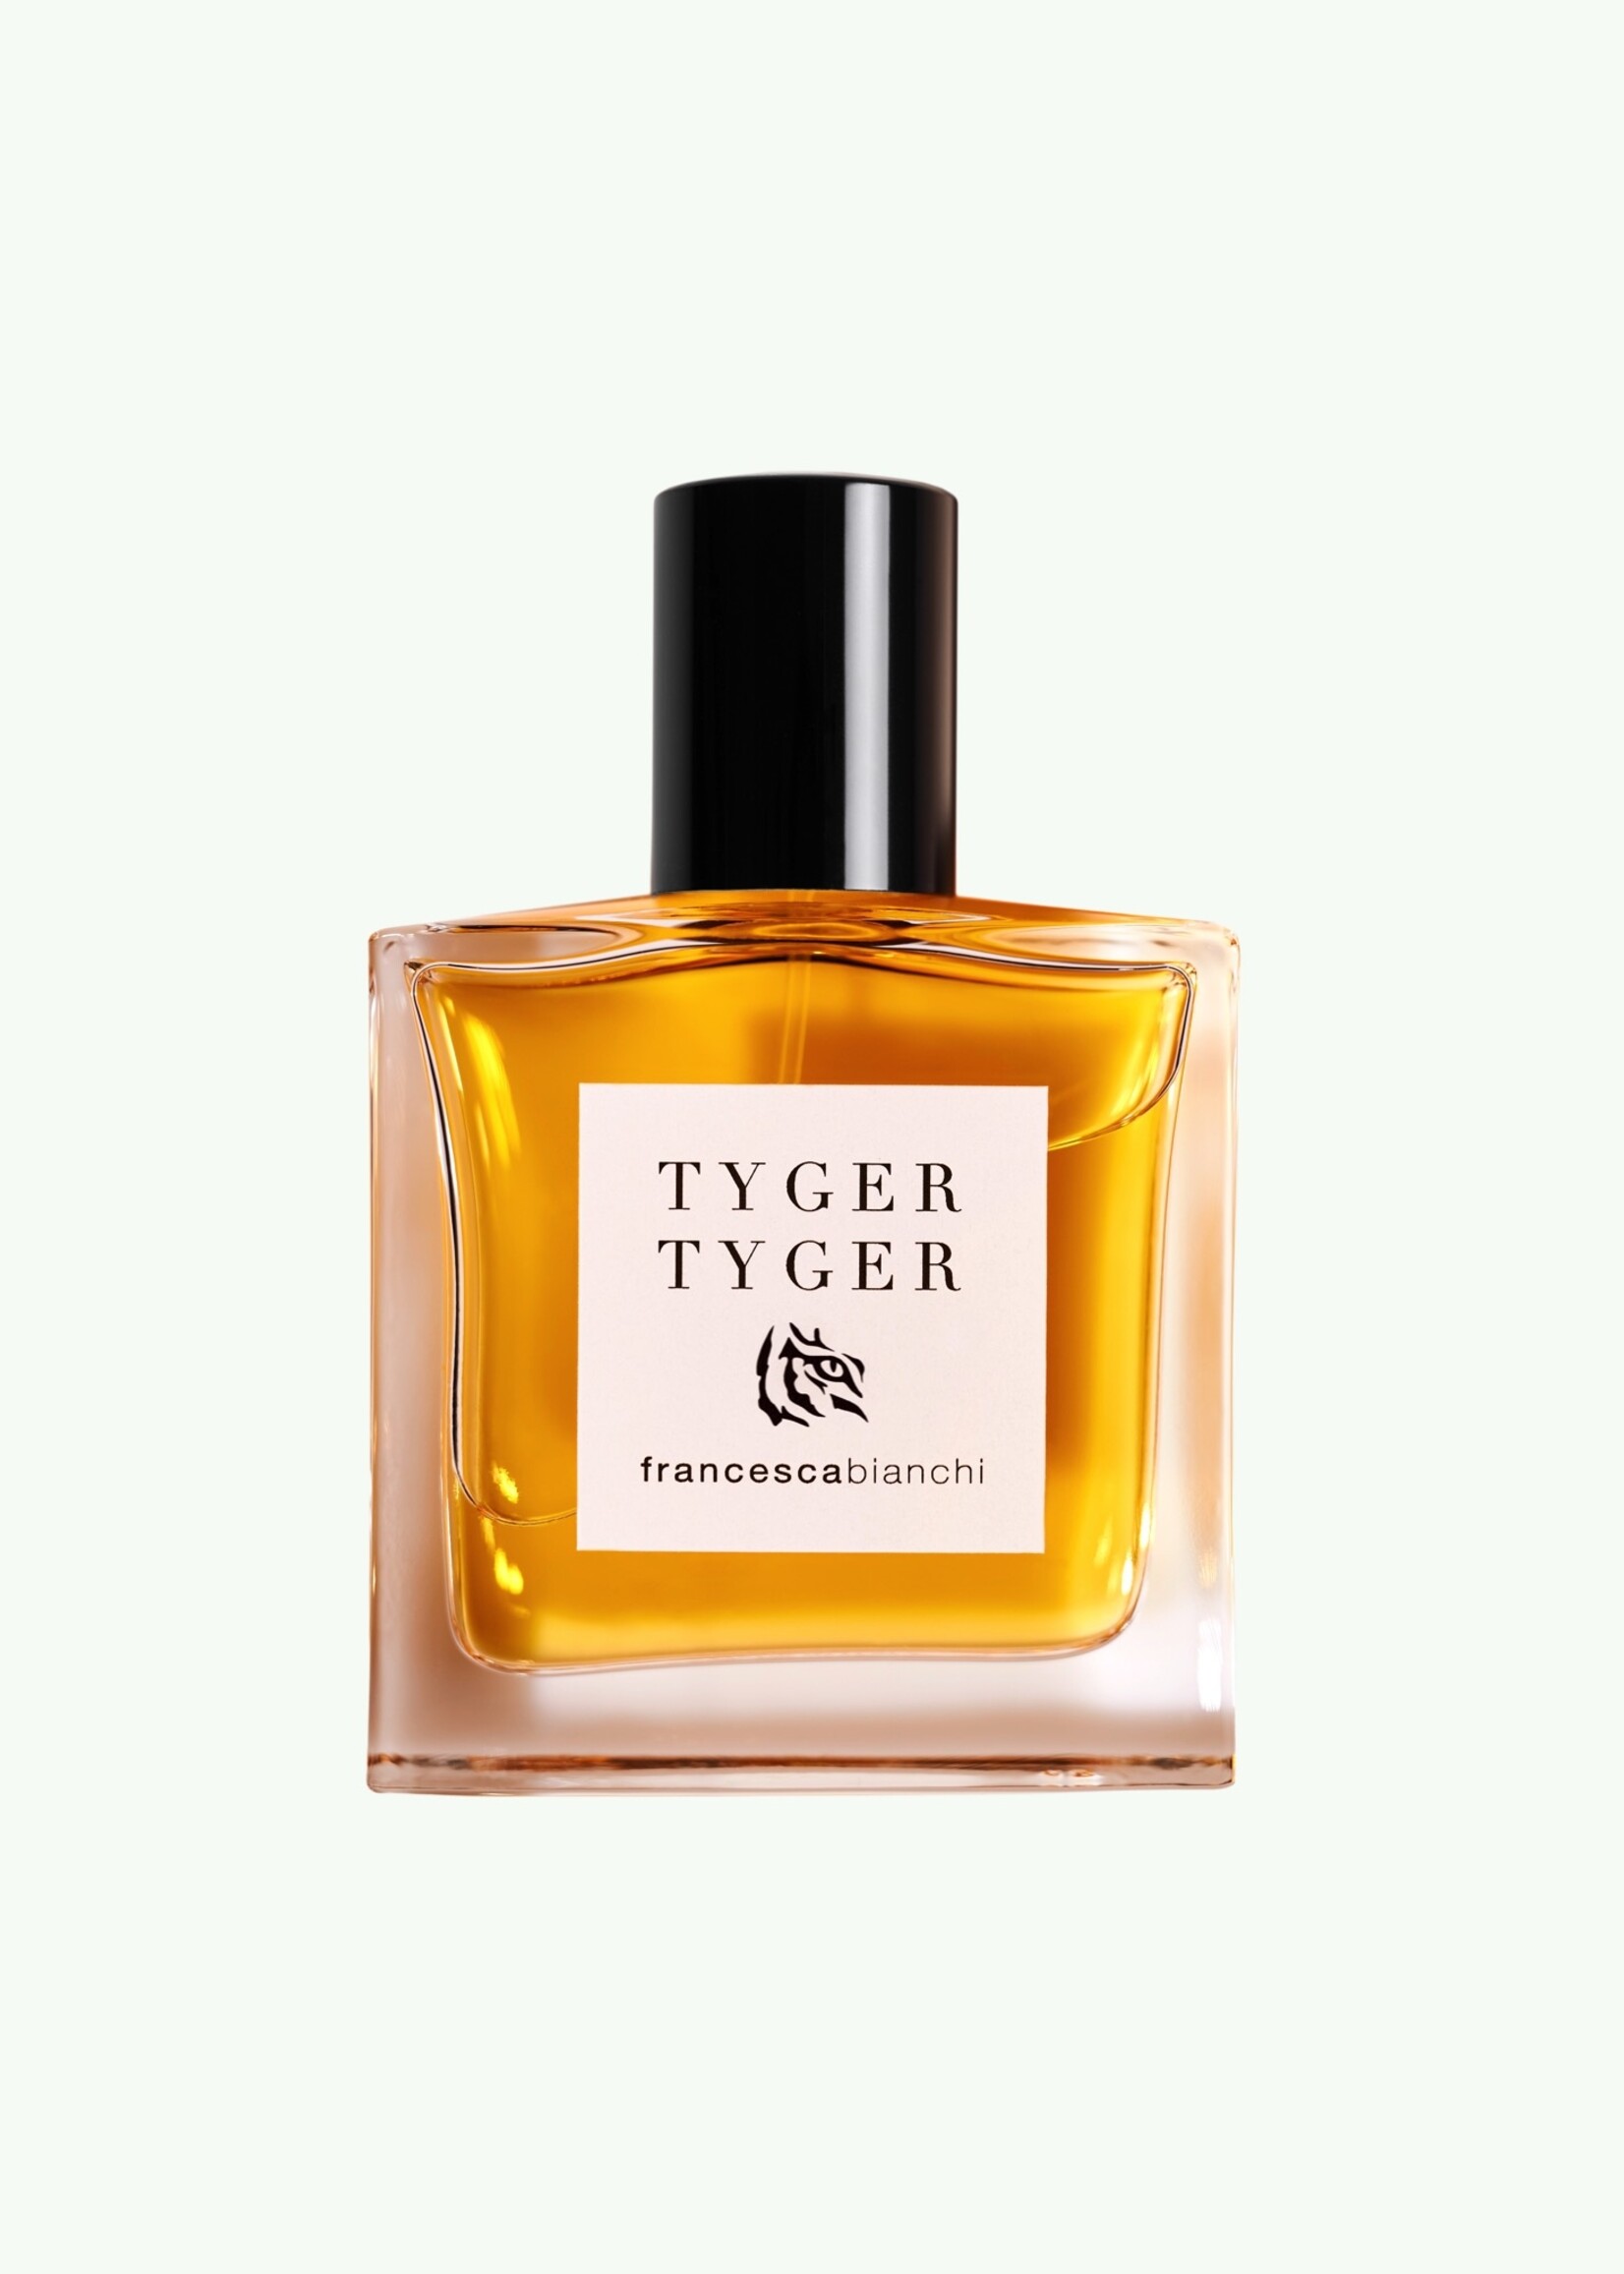 Francesca Bianchi Tyger Tyger - Extrait de Parfum